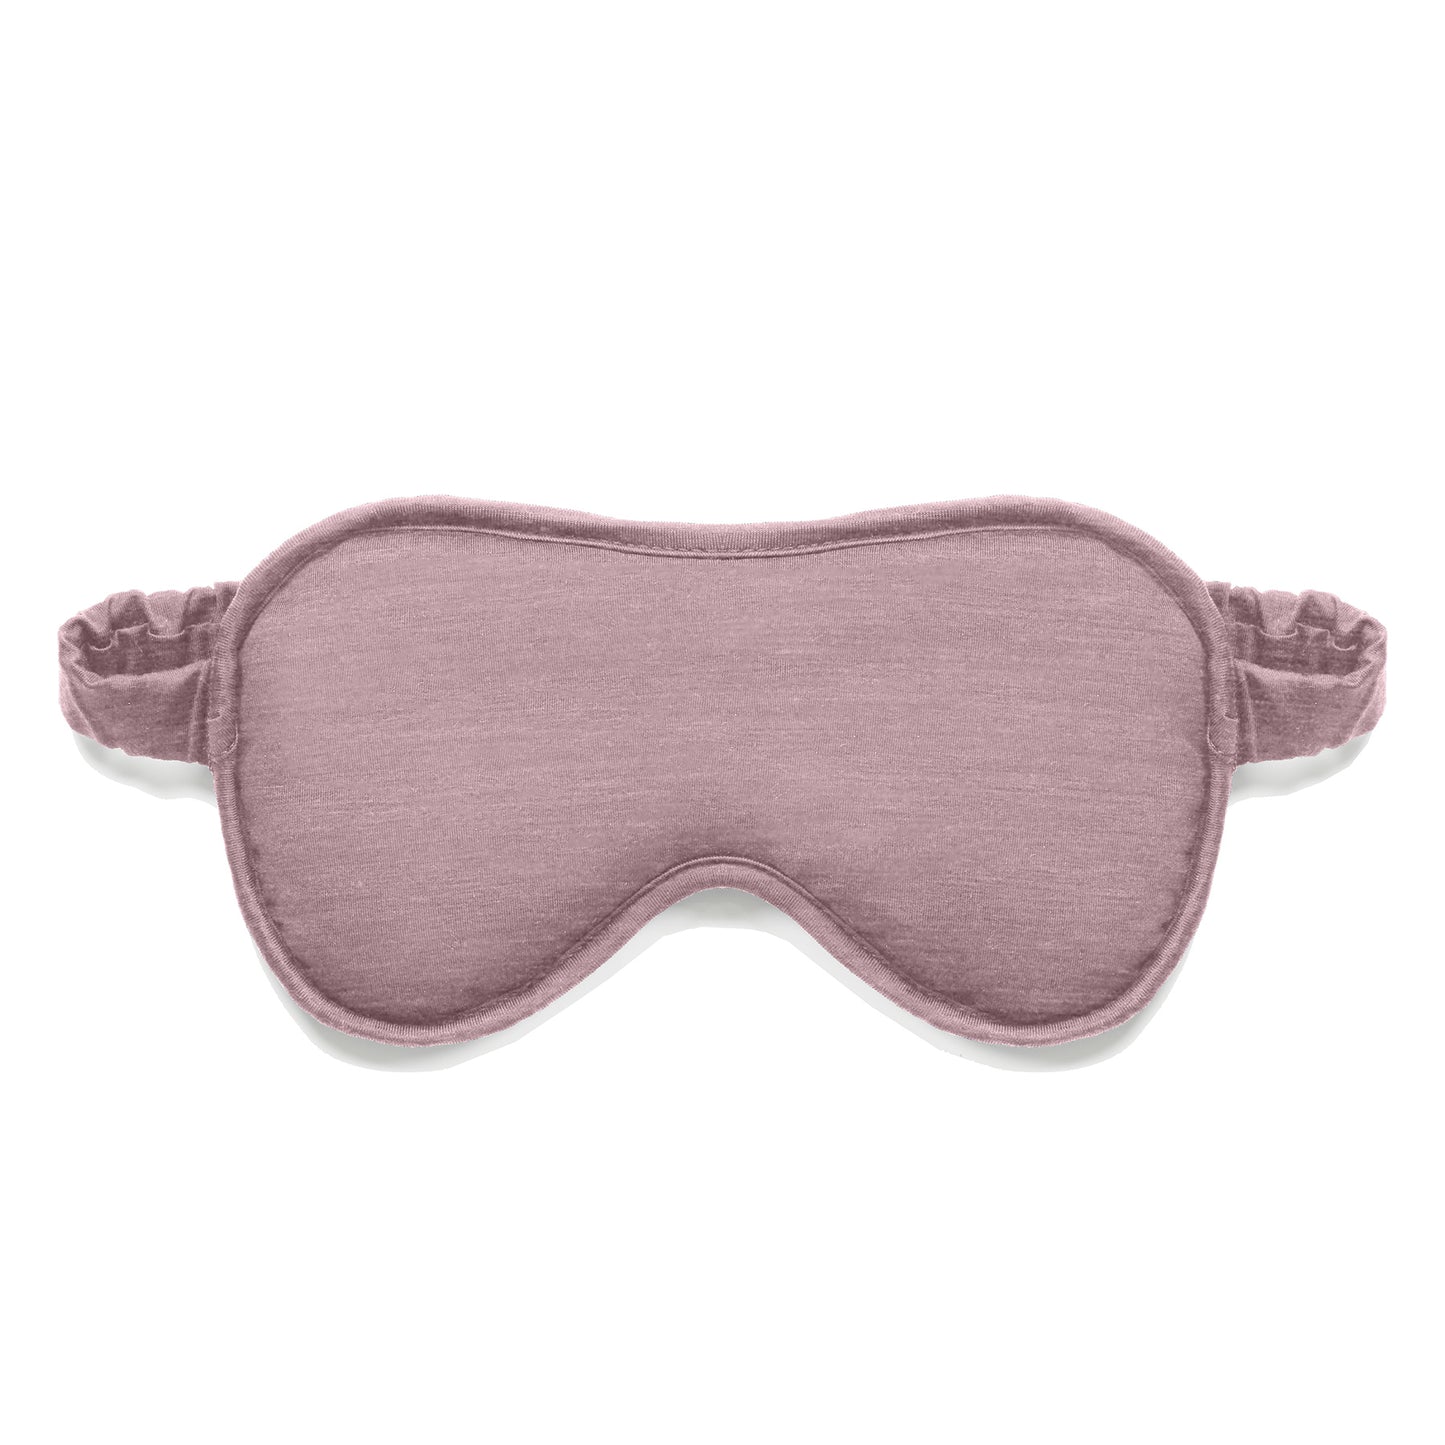 Merino Schlafmaske || Dusty pink melange